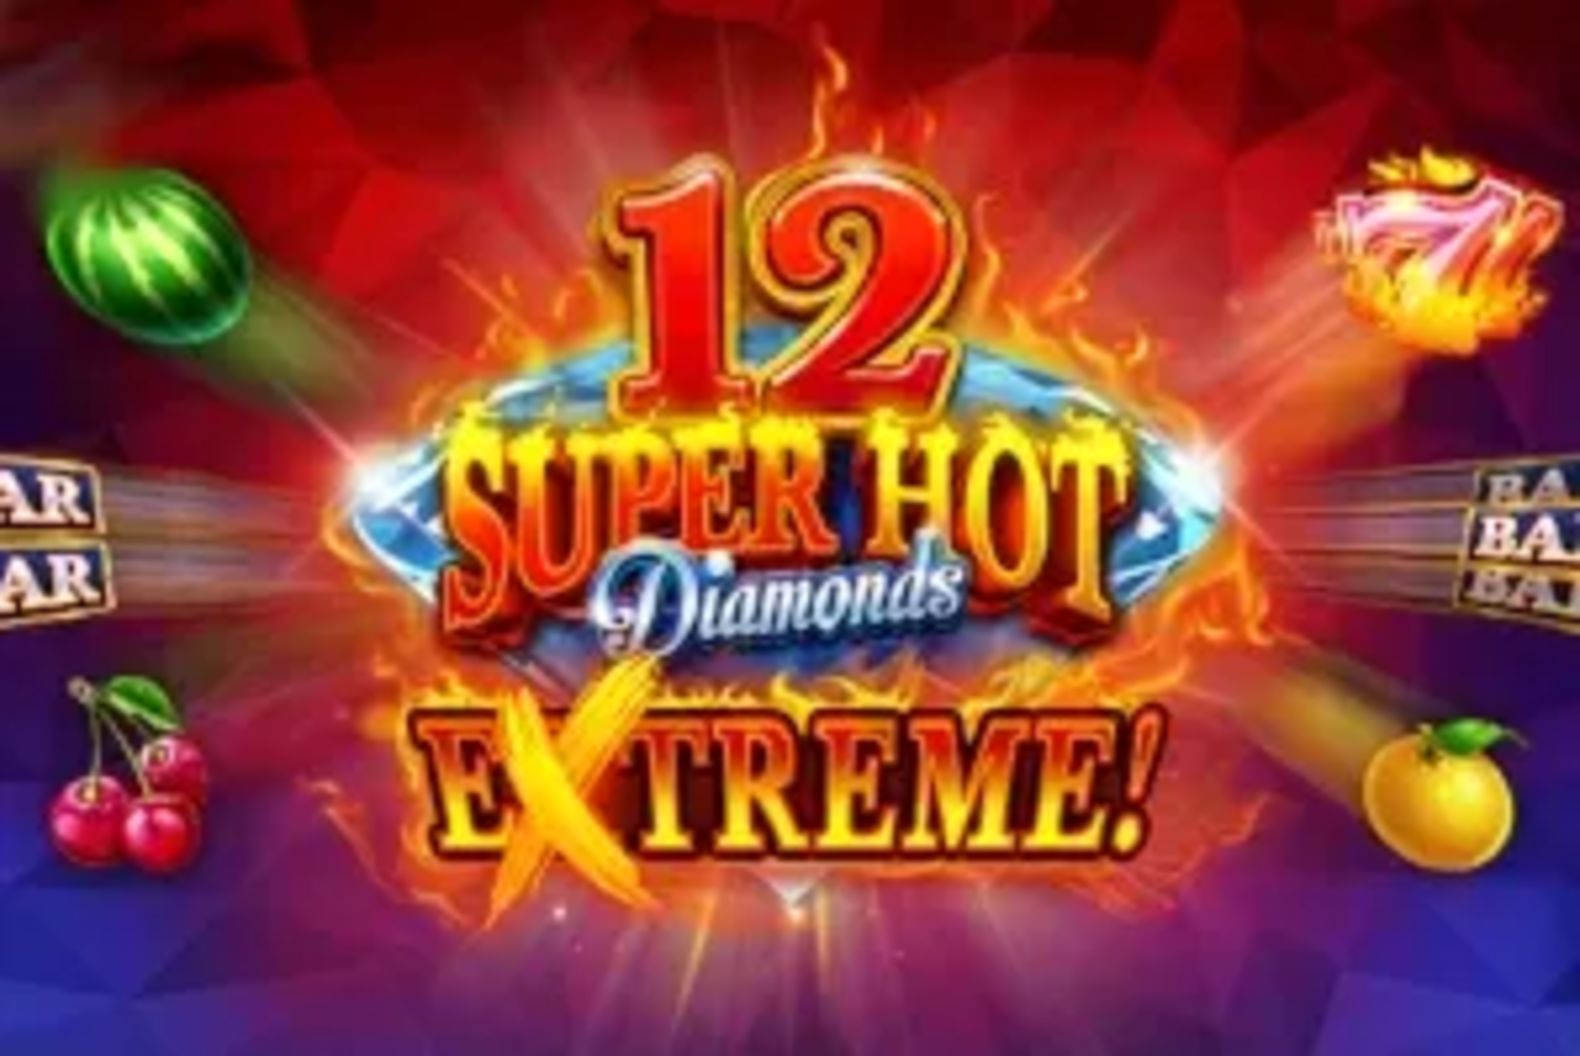 12 Super Hot Diamonds Extreme